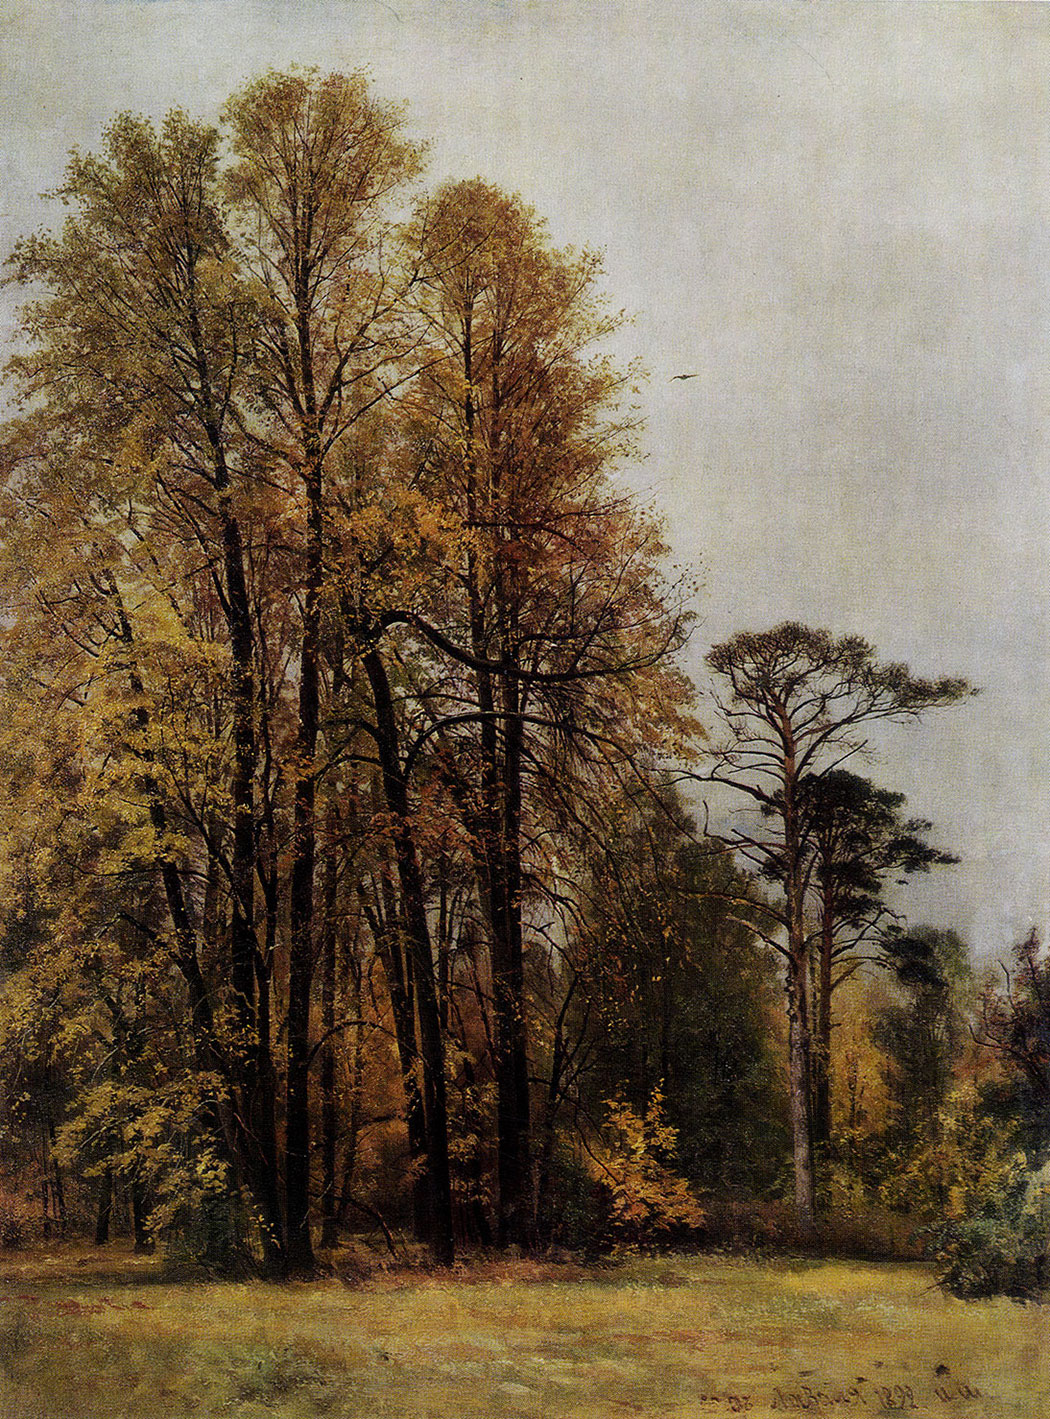 187. Autumn. 1892. Oil on canvas. 107X81 cm. The Russian Museum, Leningrad